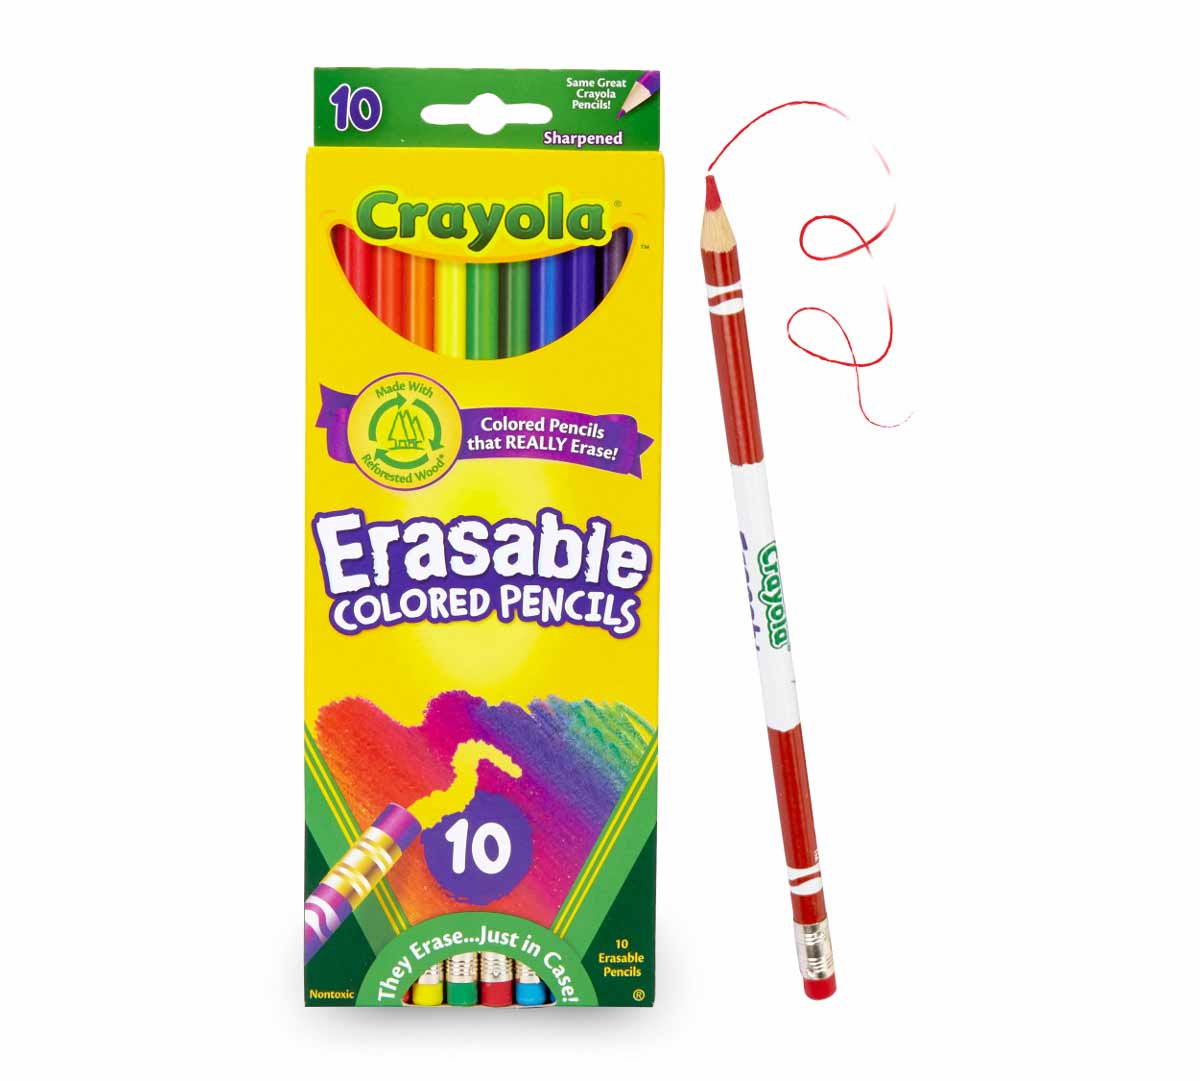 https://shop.crayola.com/on/demandware.static/-/Sites-crayola-storefront/default/dw0efffb11/images/68-4410-0-209_Erasable-Colored-Pencils_10ct_PDP-1_F2.jpg